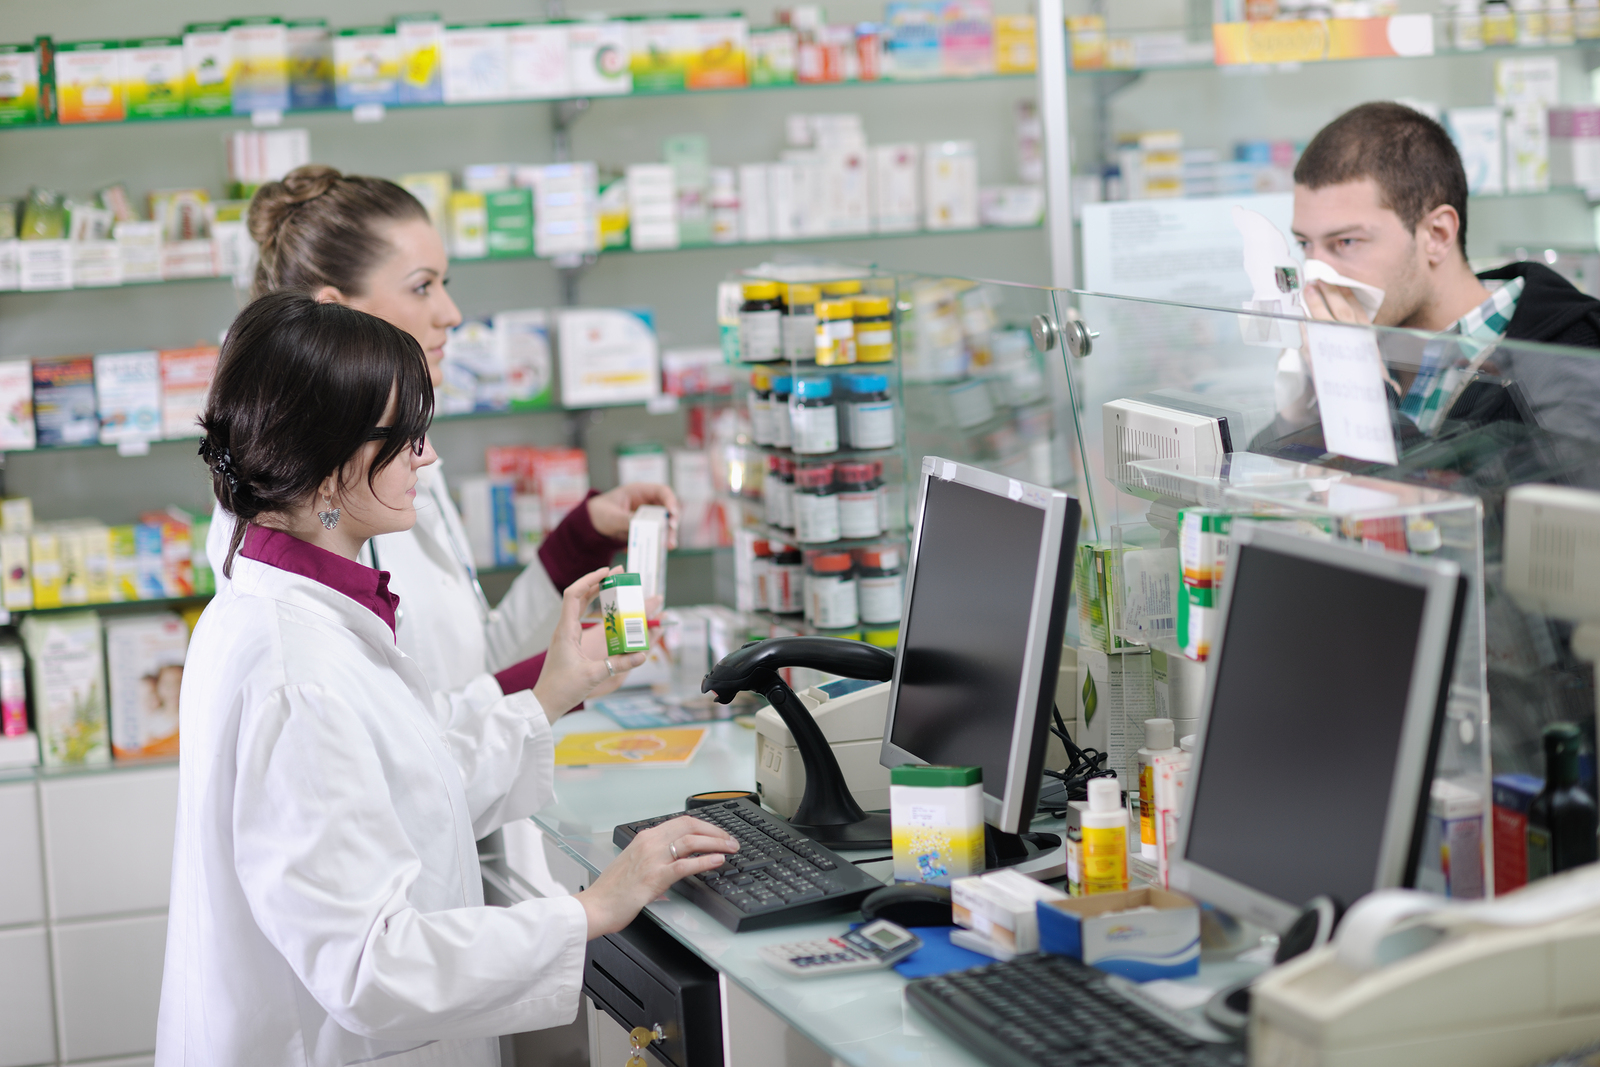 Raids in pharmacies continue